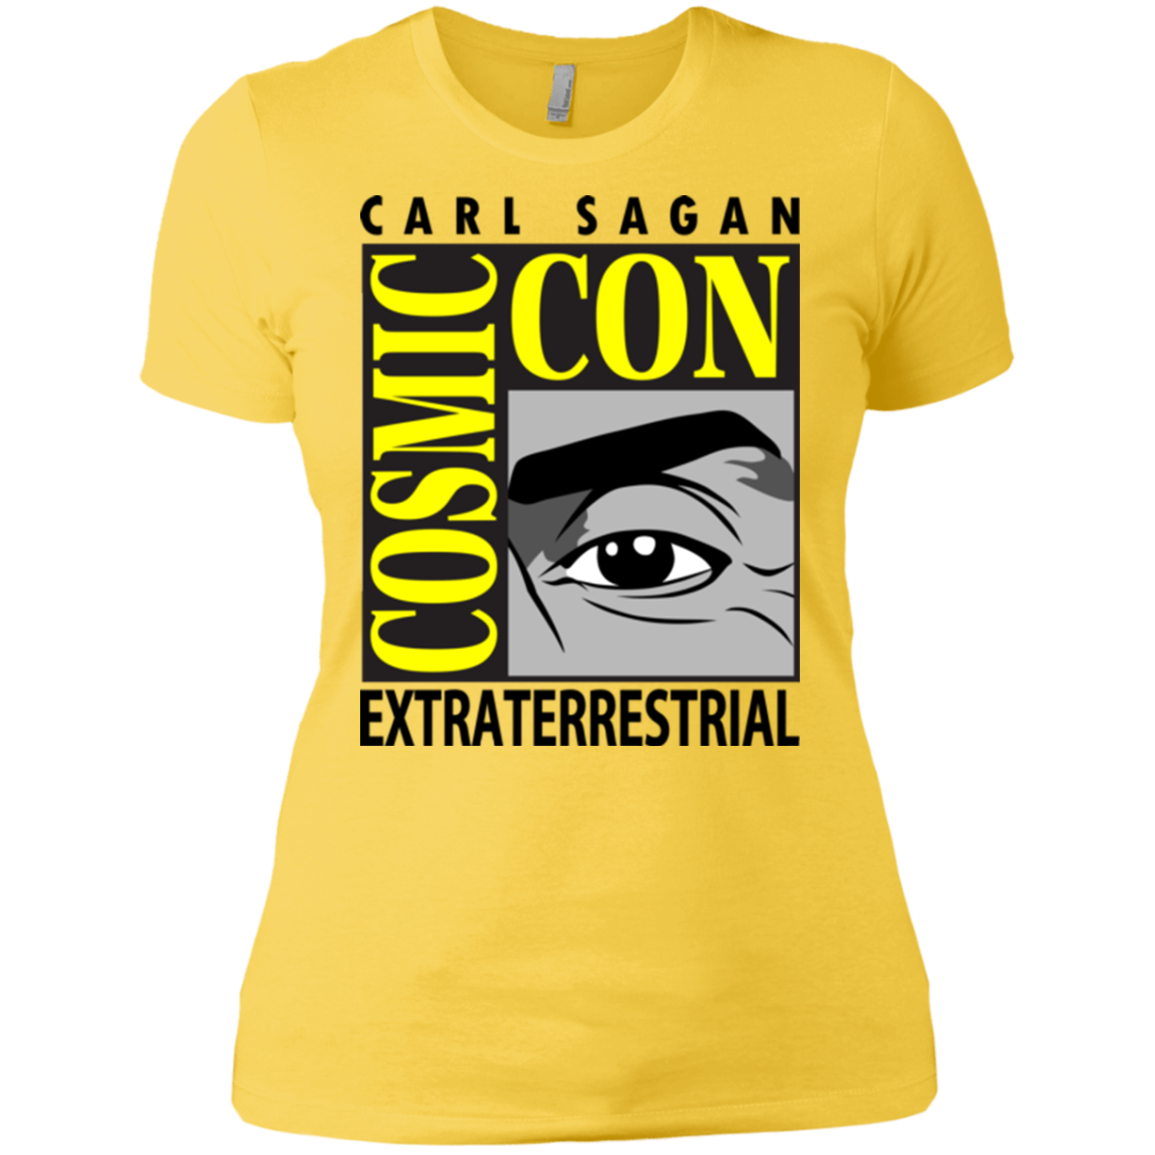 Cosmic Con Women's Premium T-Shirt